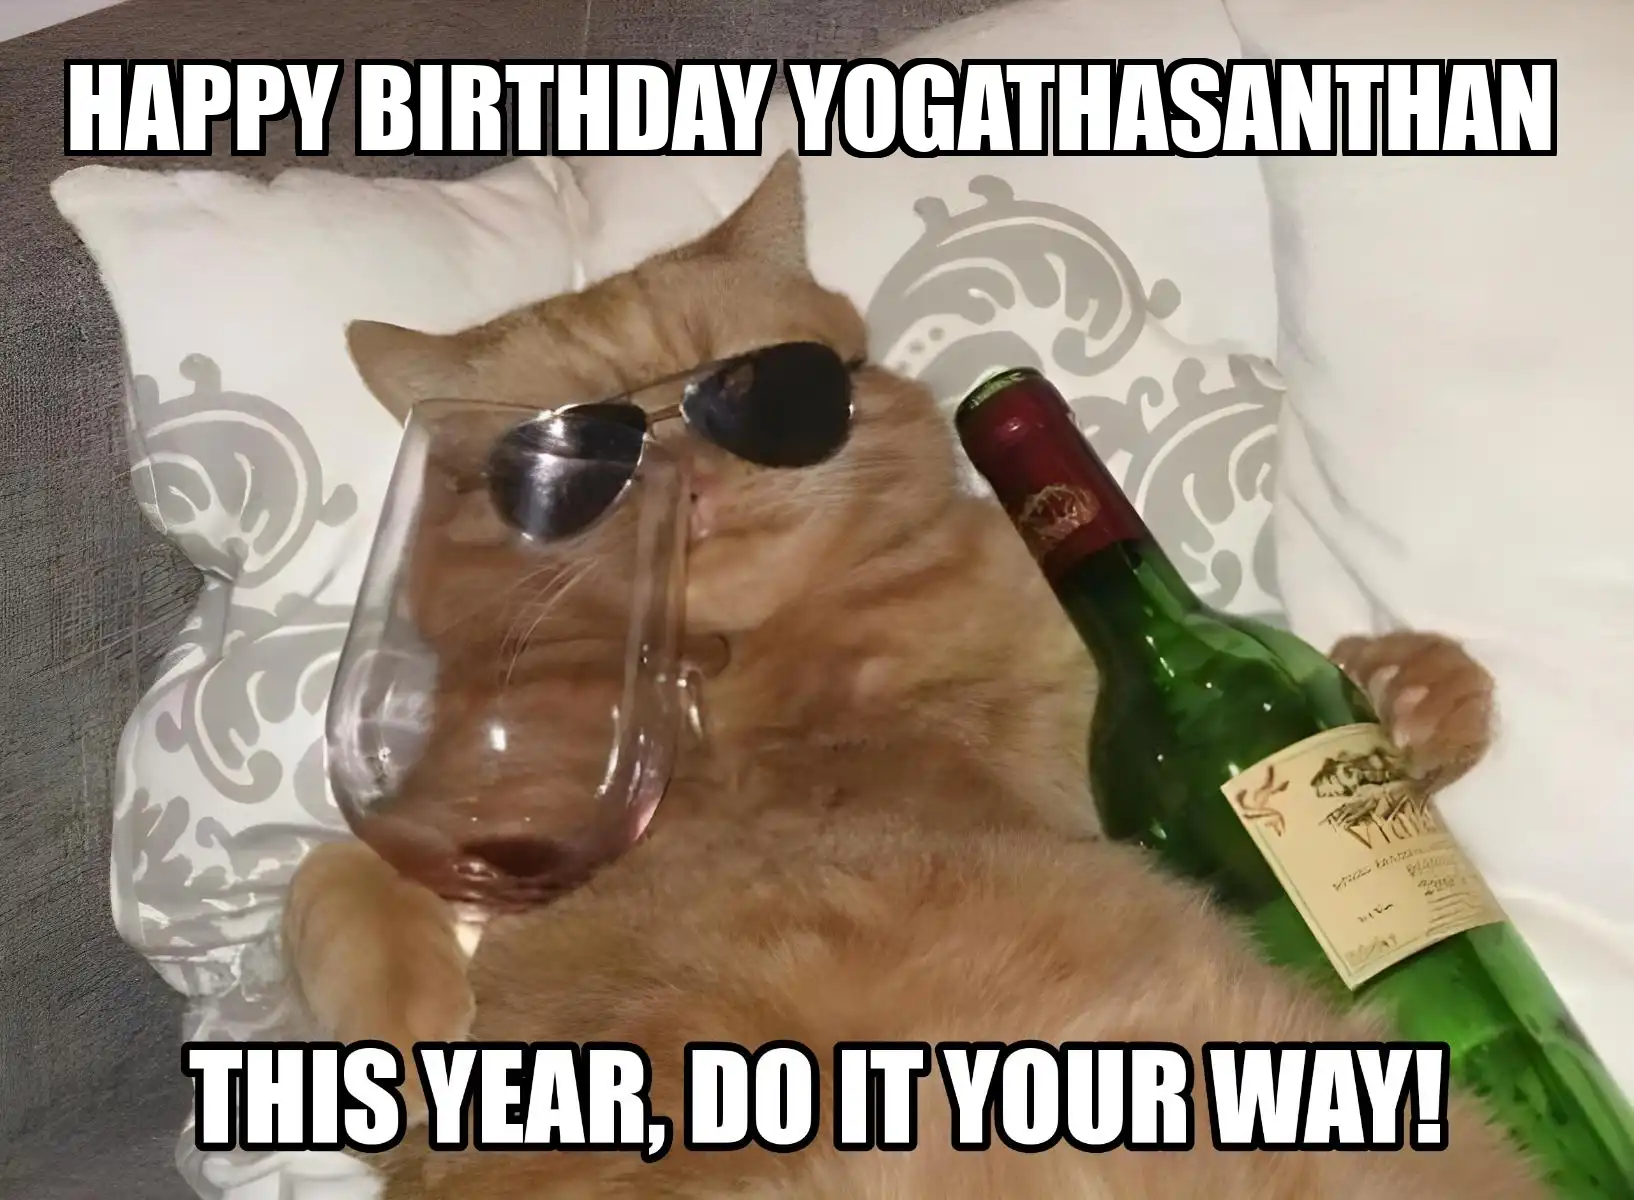 Happy Birthday Yogathasanthan This Year Do It Your Way Meme